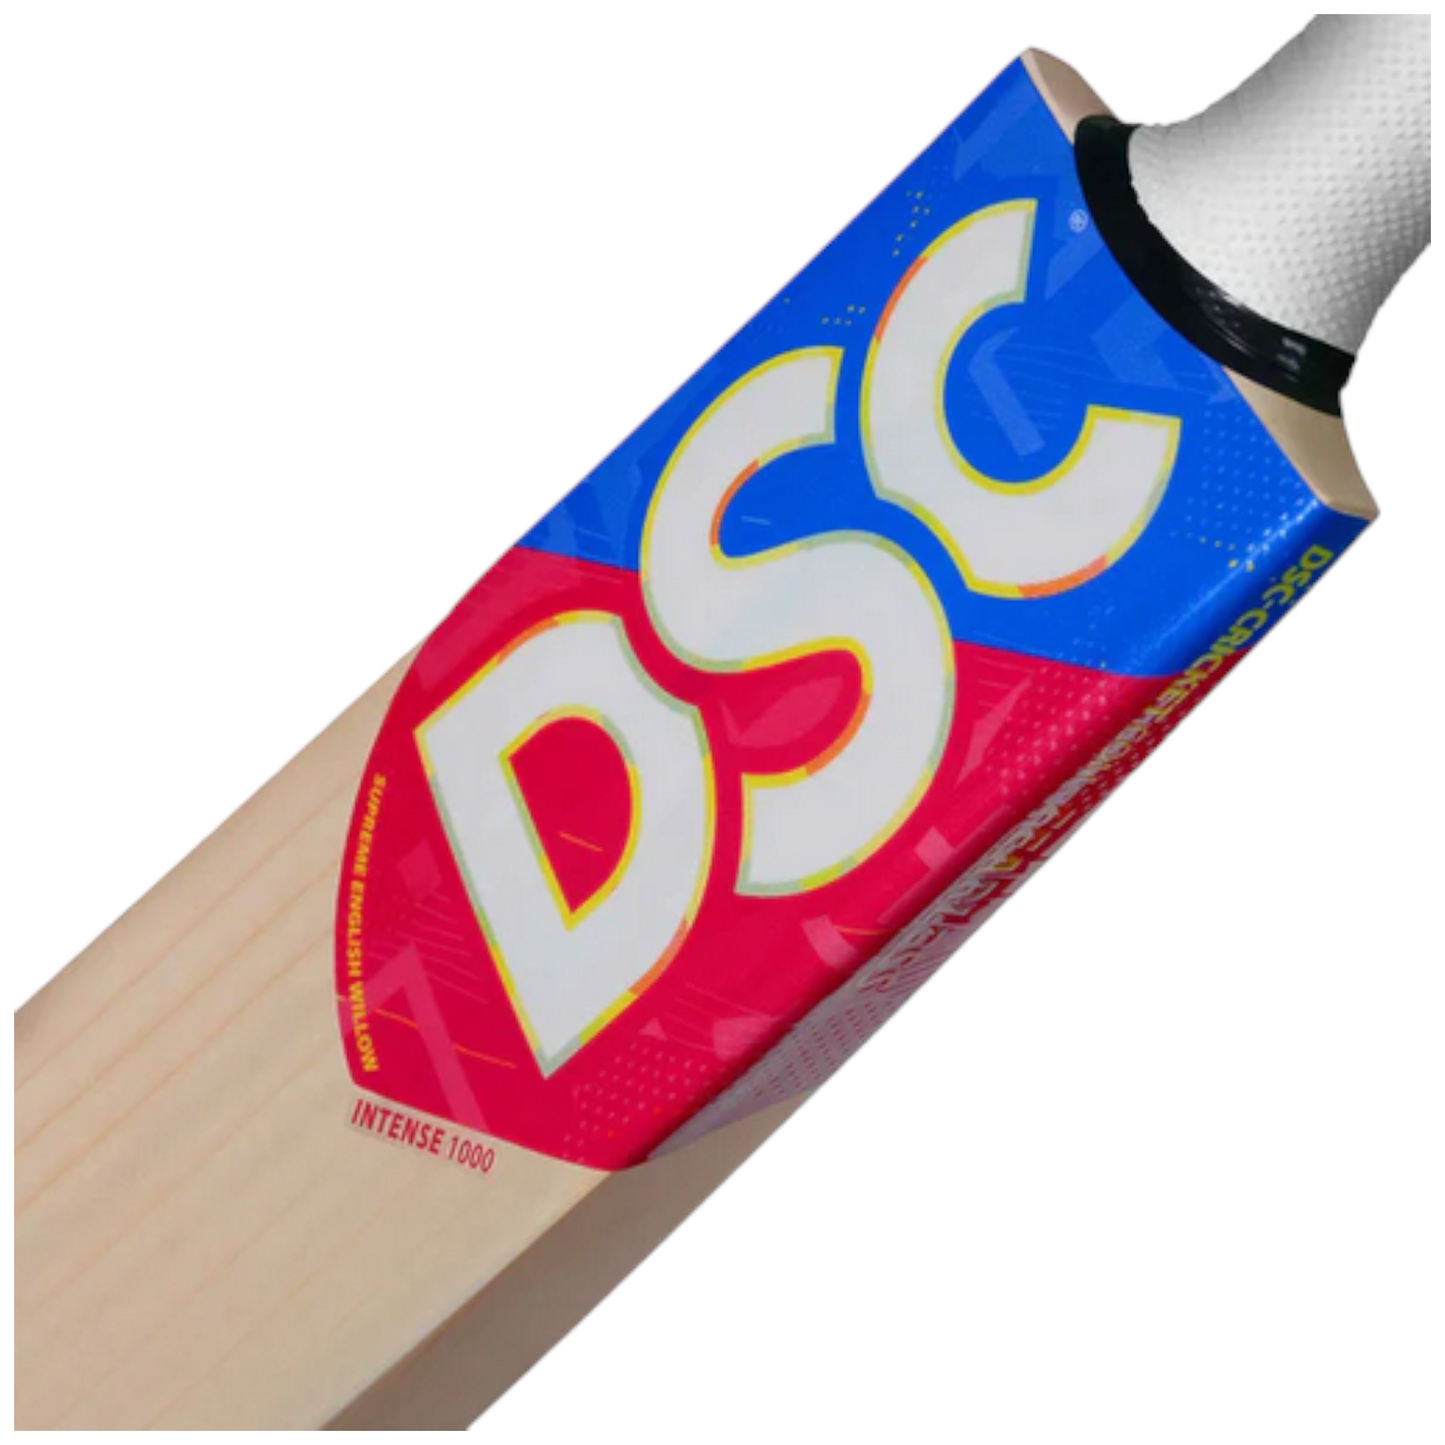 DSC Intense Bat